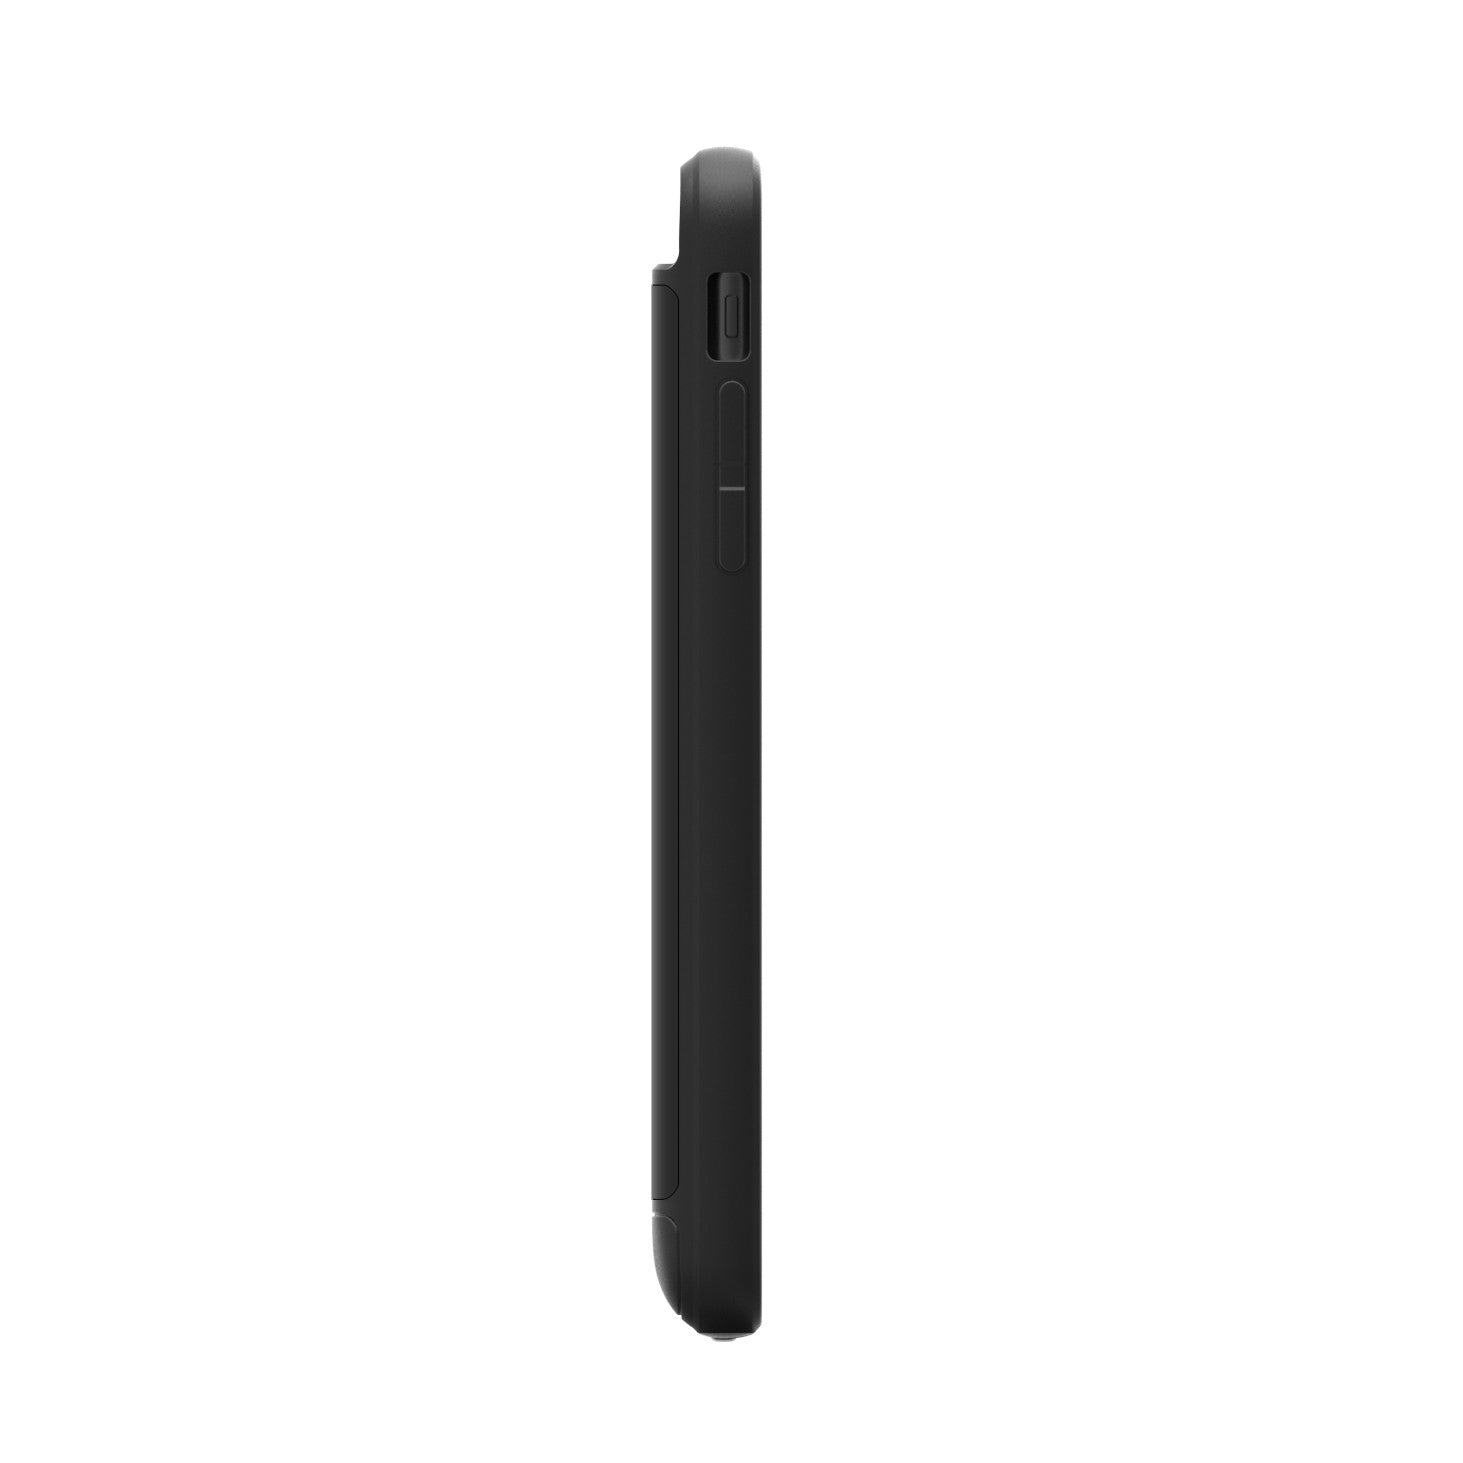 Novapak - The iPhone 6 Battery Case plus Protection - Juno Power